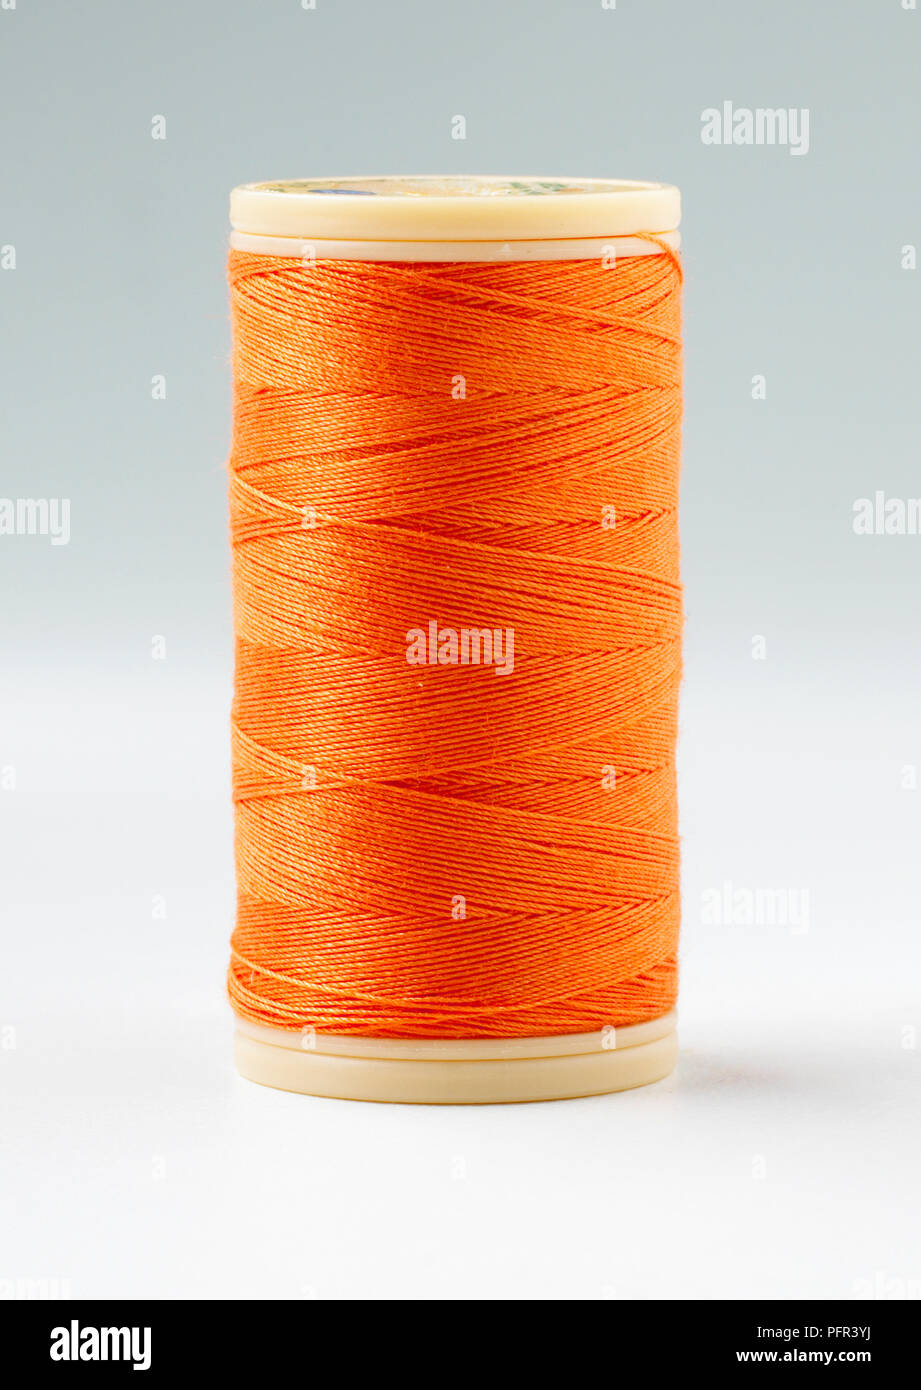 Bobina de hilo de coser de algodón naranja brillante Foto de stock